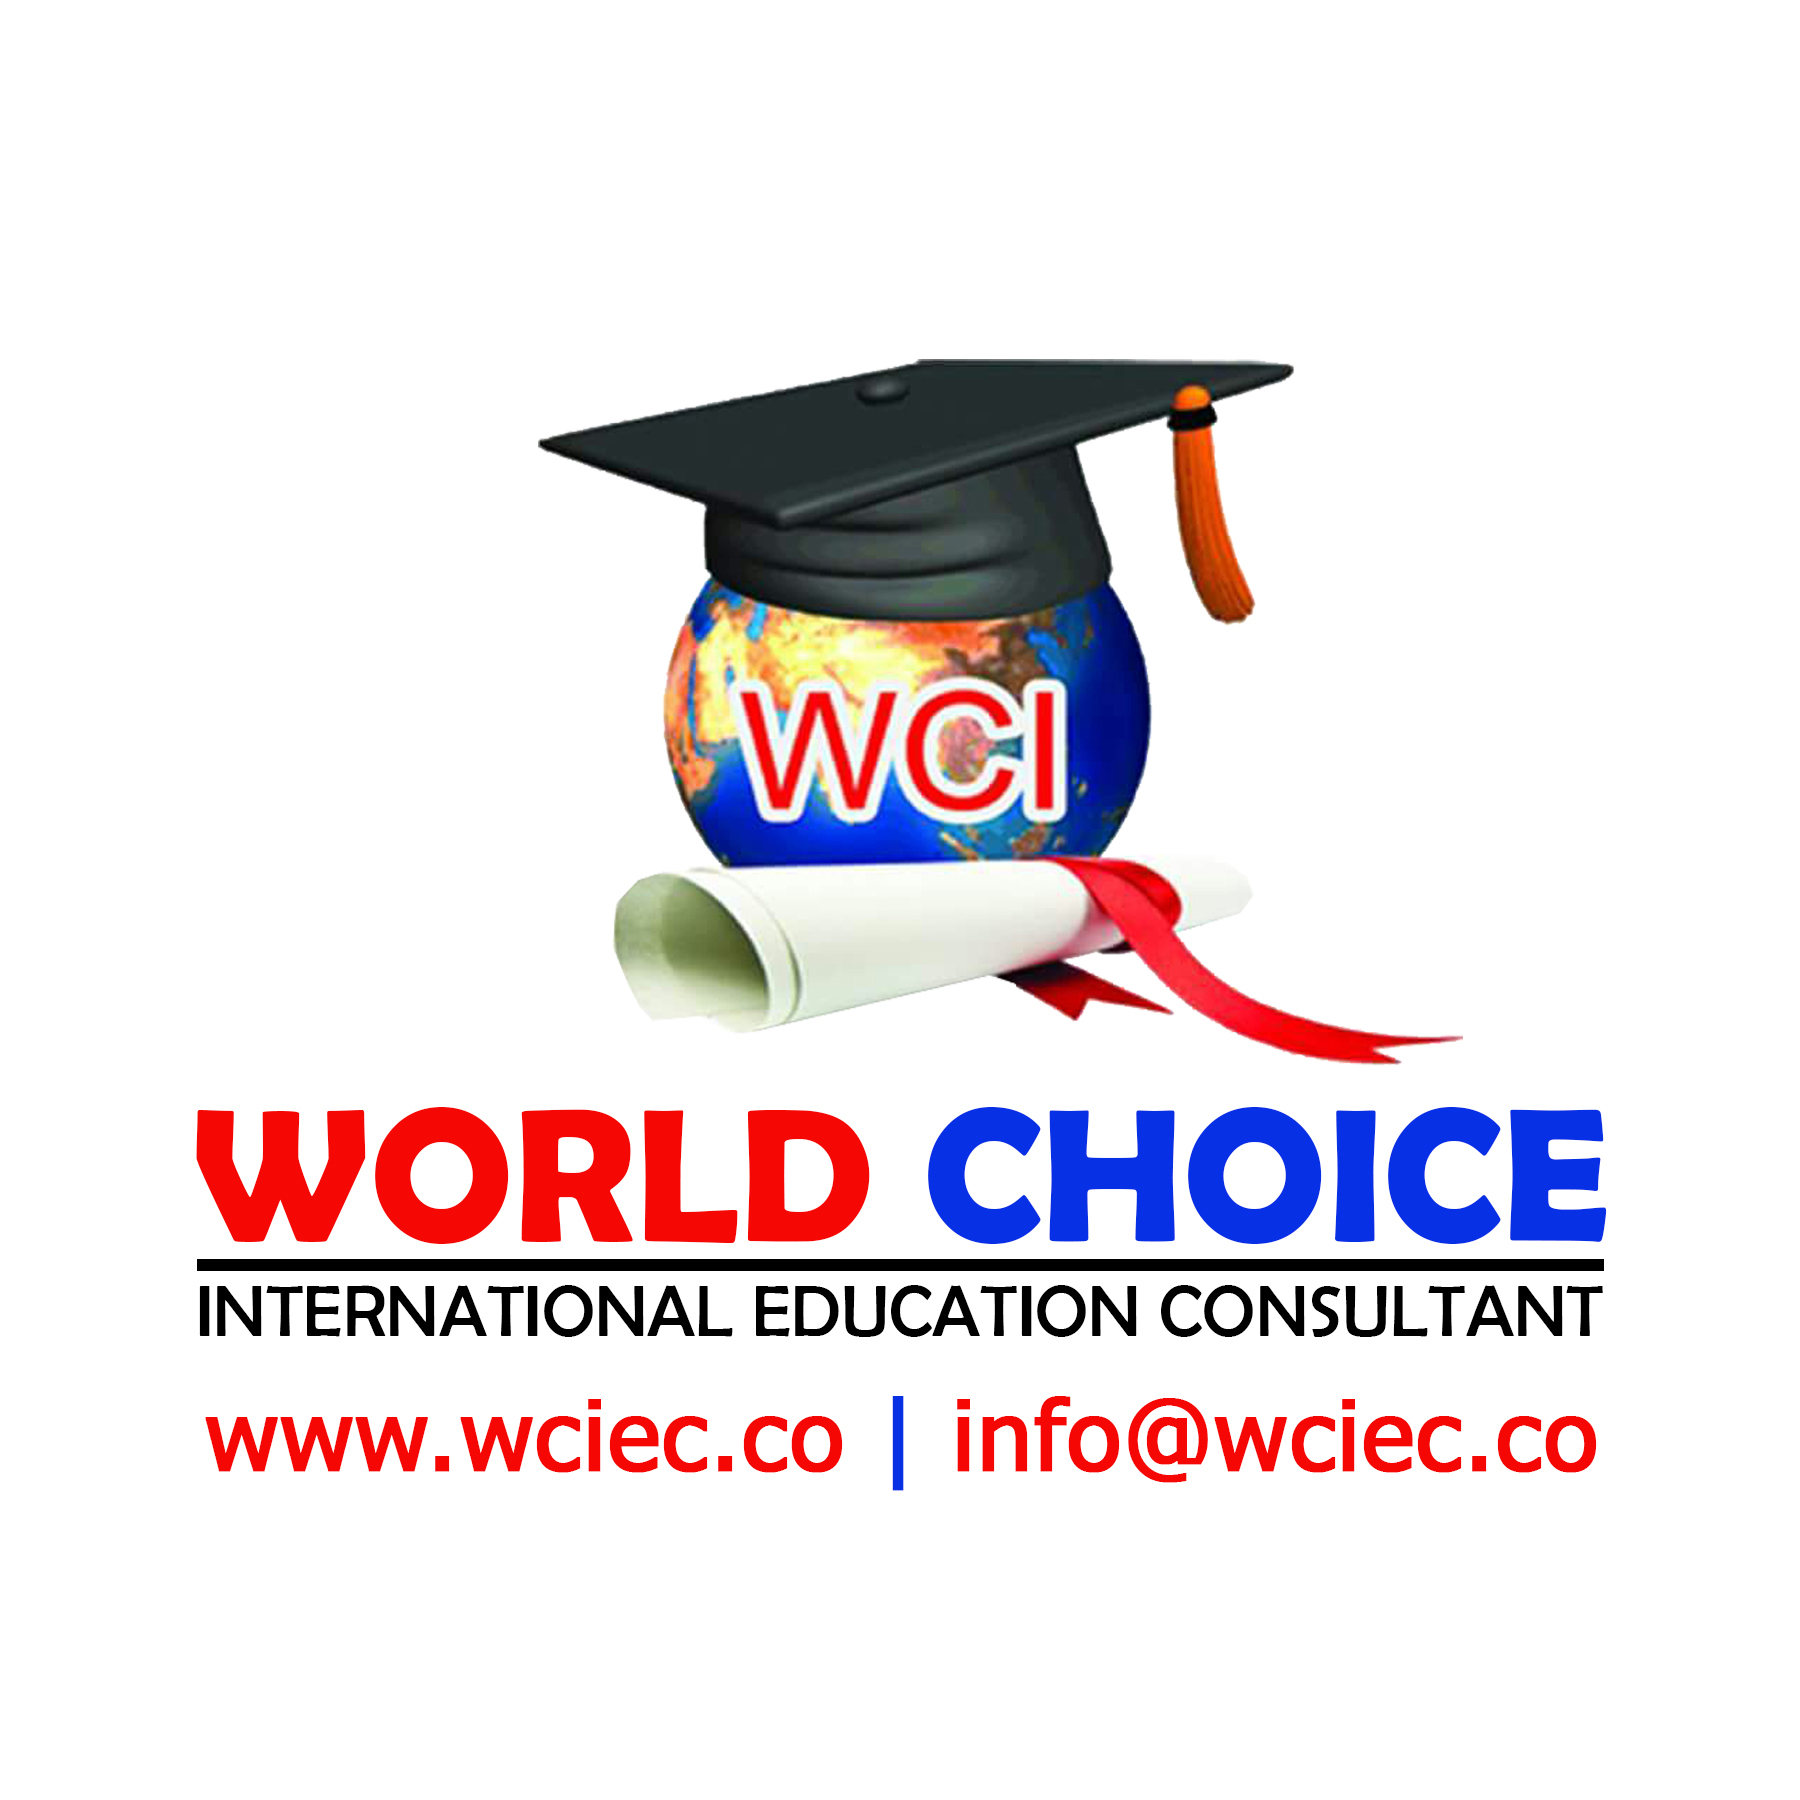 World Choice International Education Consultant